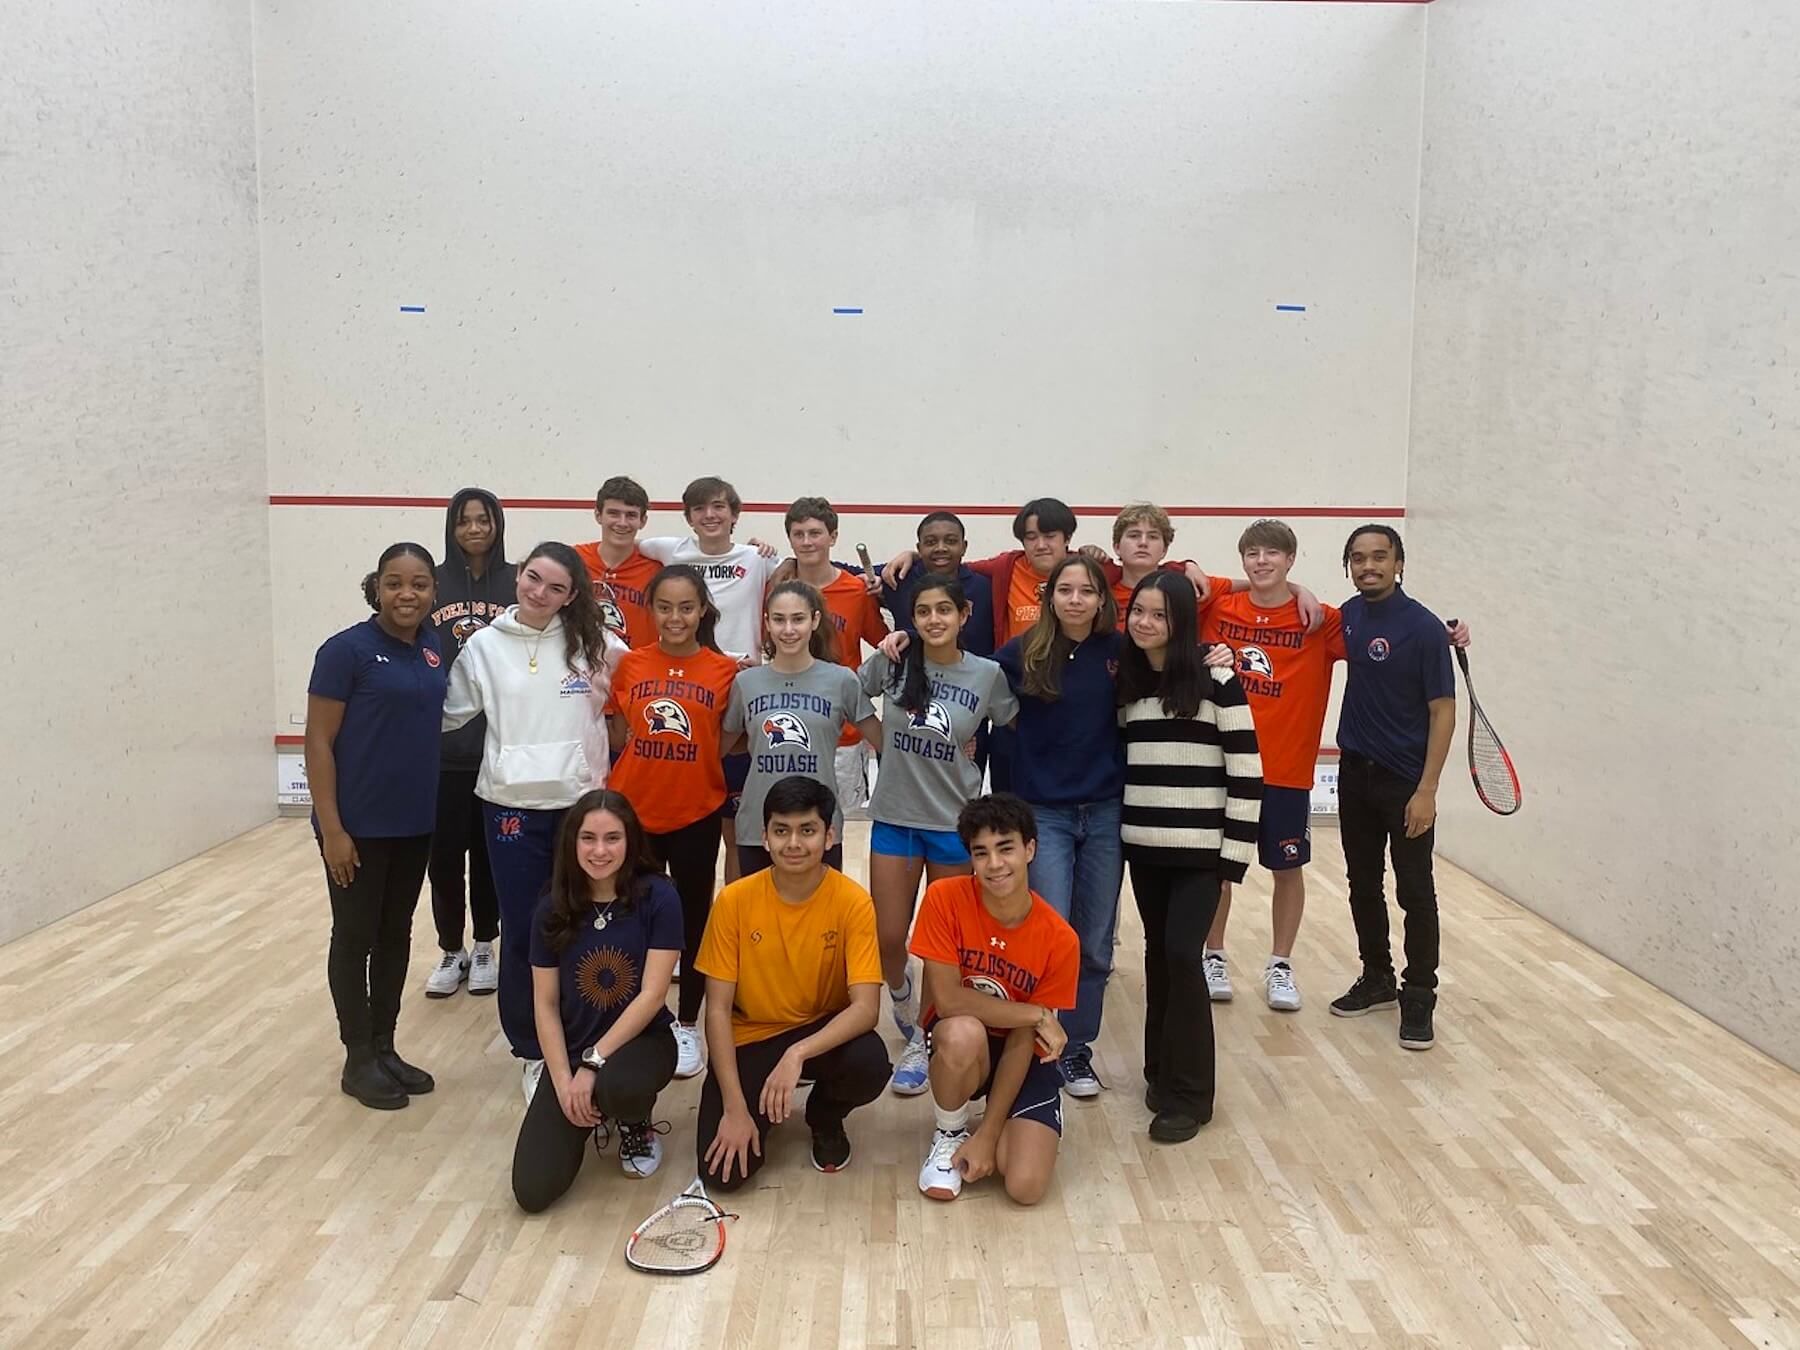 Fieldston Upper squash team poses for group photo inside squash court.